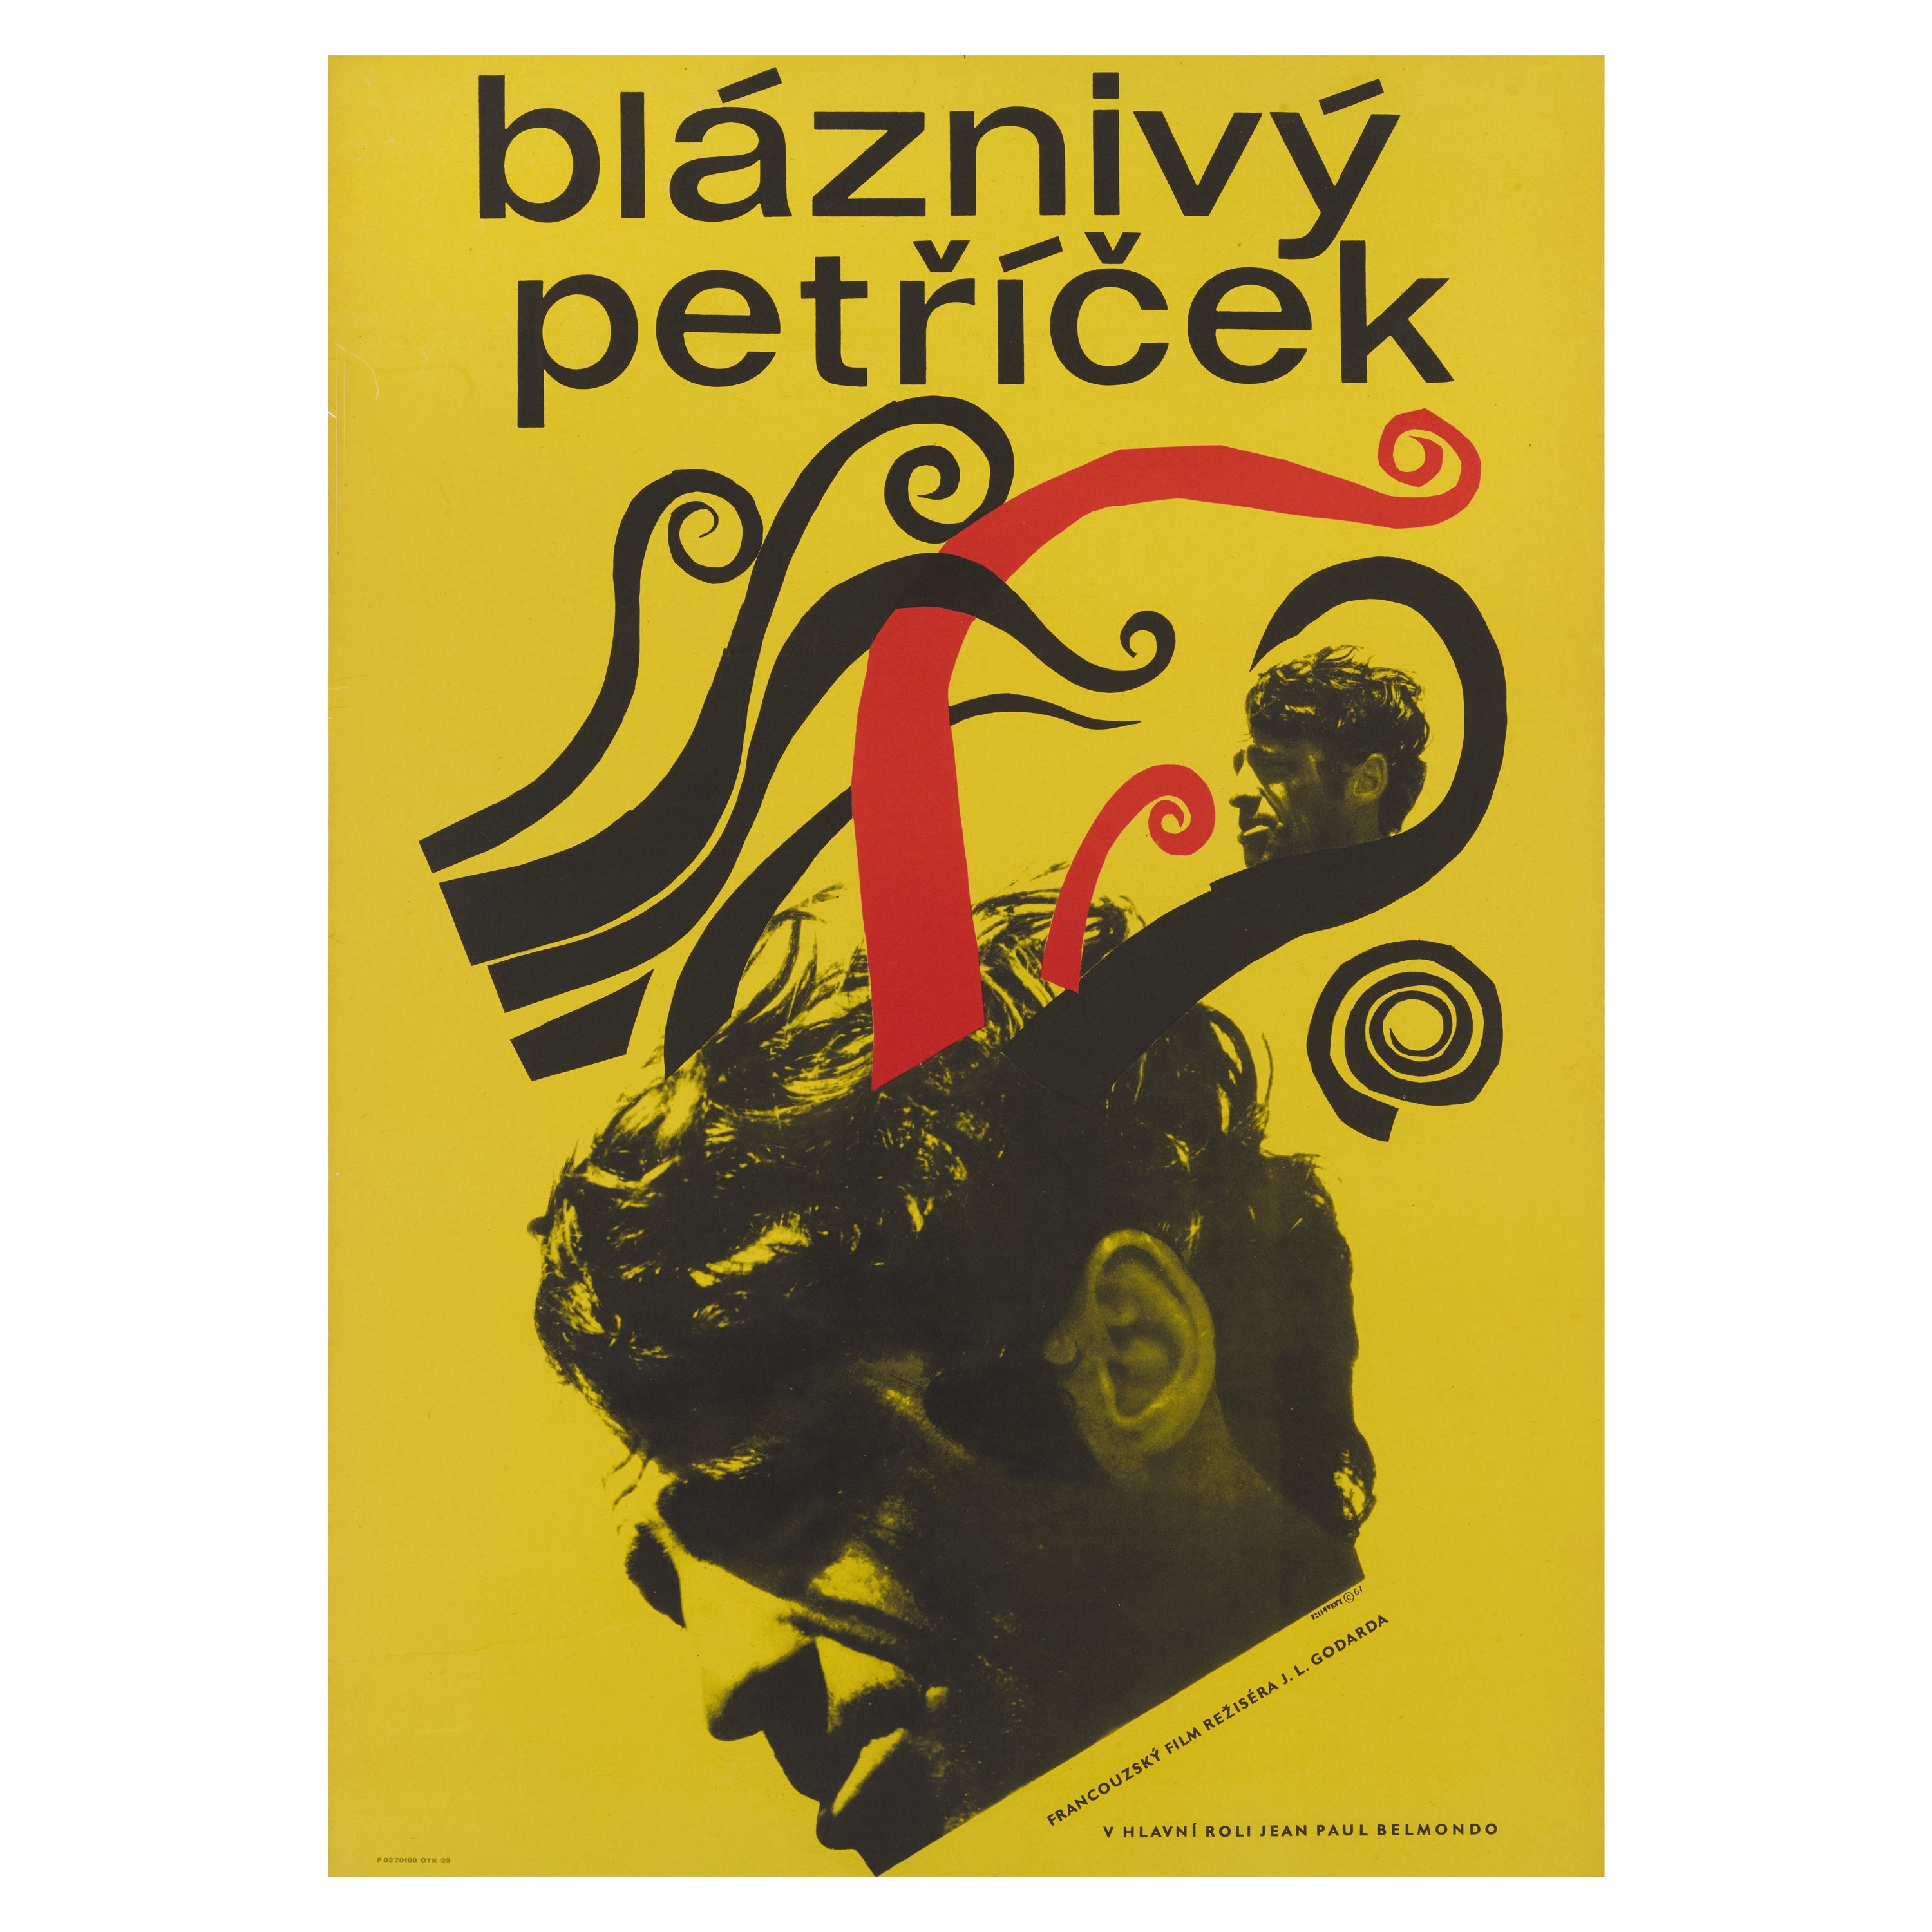 Pierrot Le Fou / Blaznivy Petricek For Sale